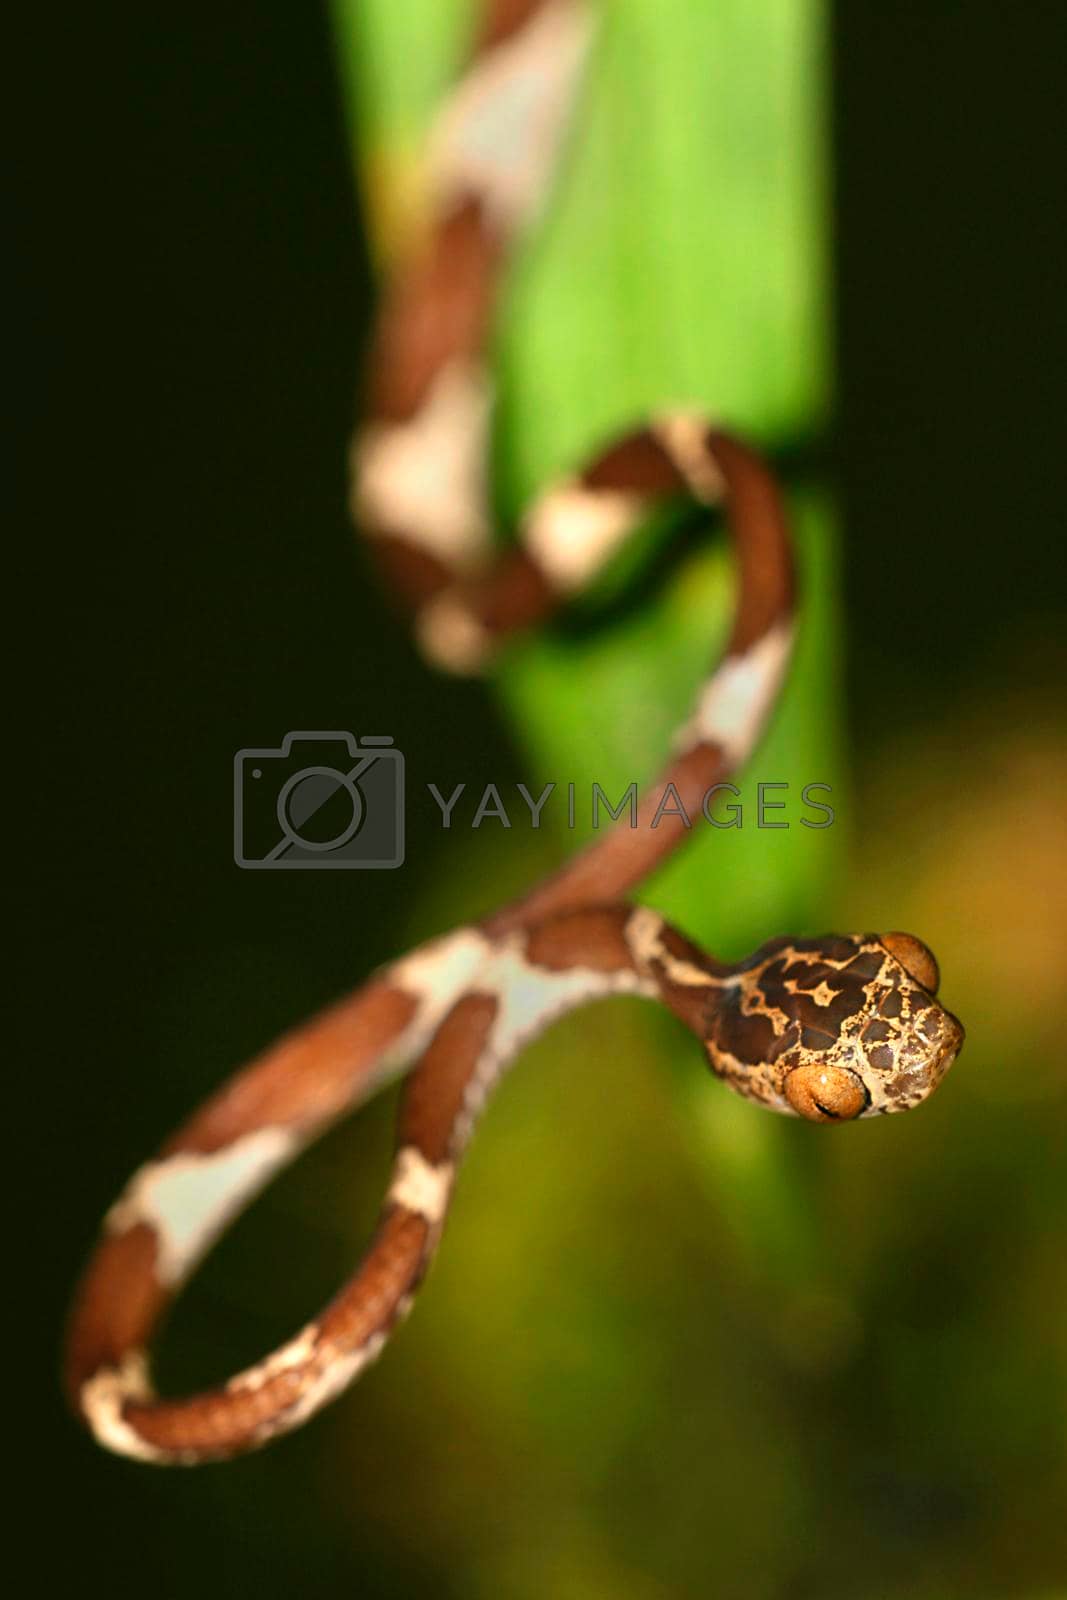 Royalty free image of Blunthead Tree Snake, Napo River Basin, Amazonia, Ecuador by alcaproac